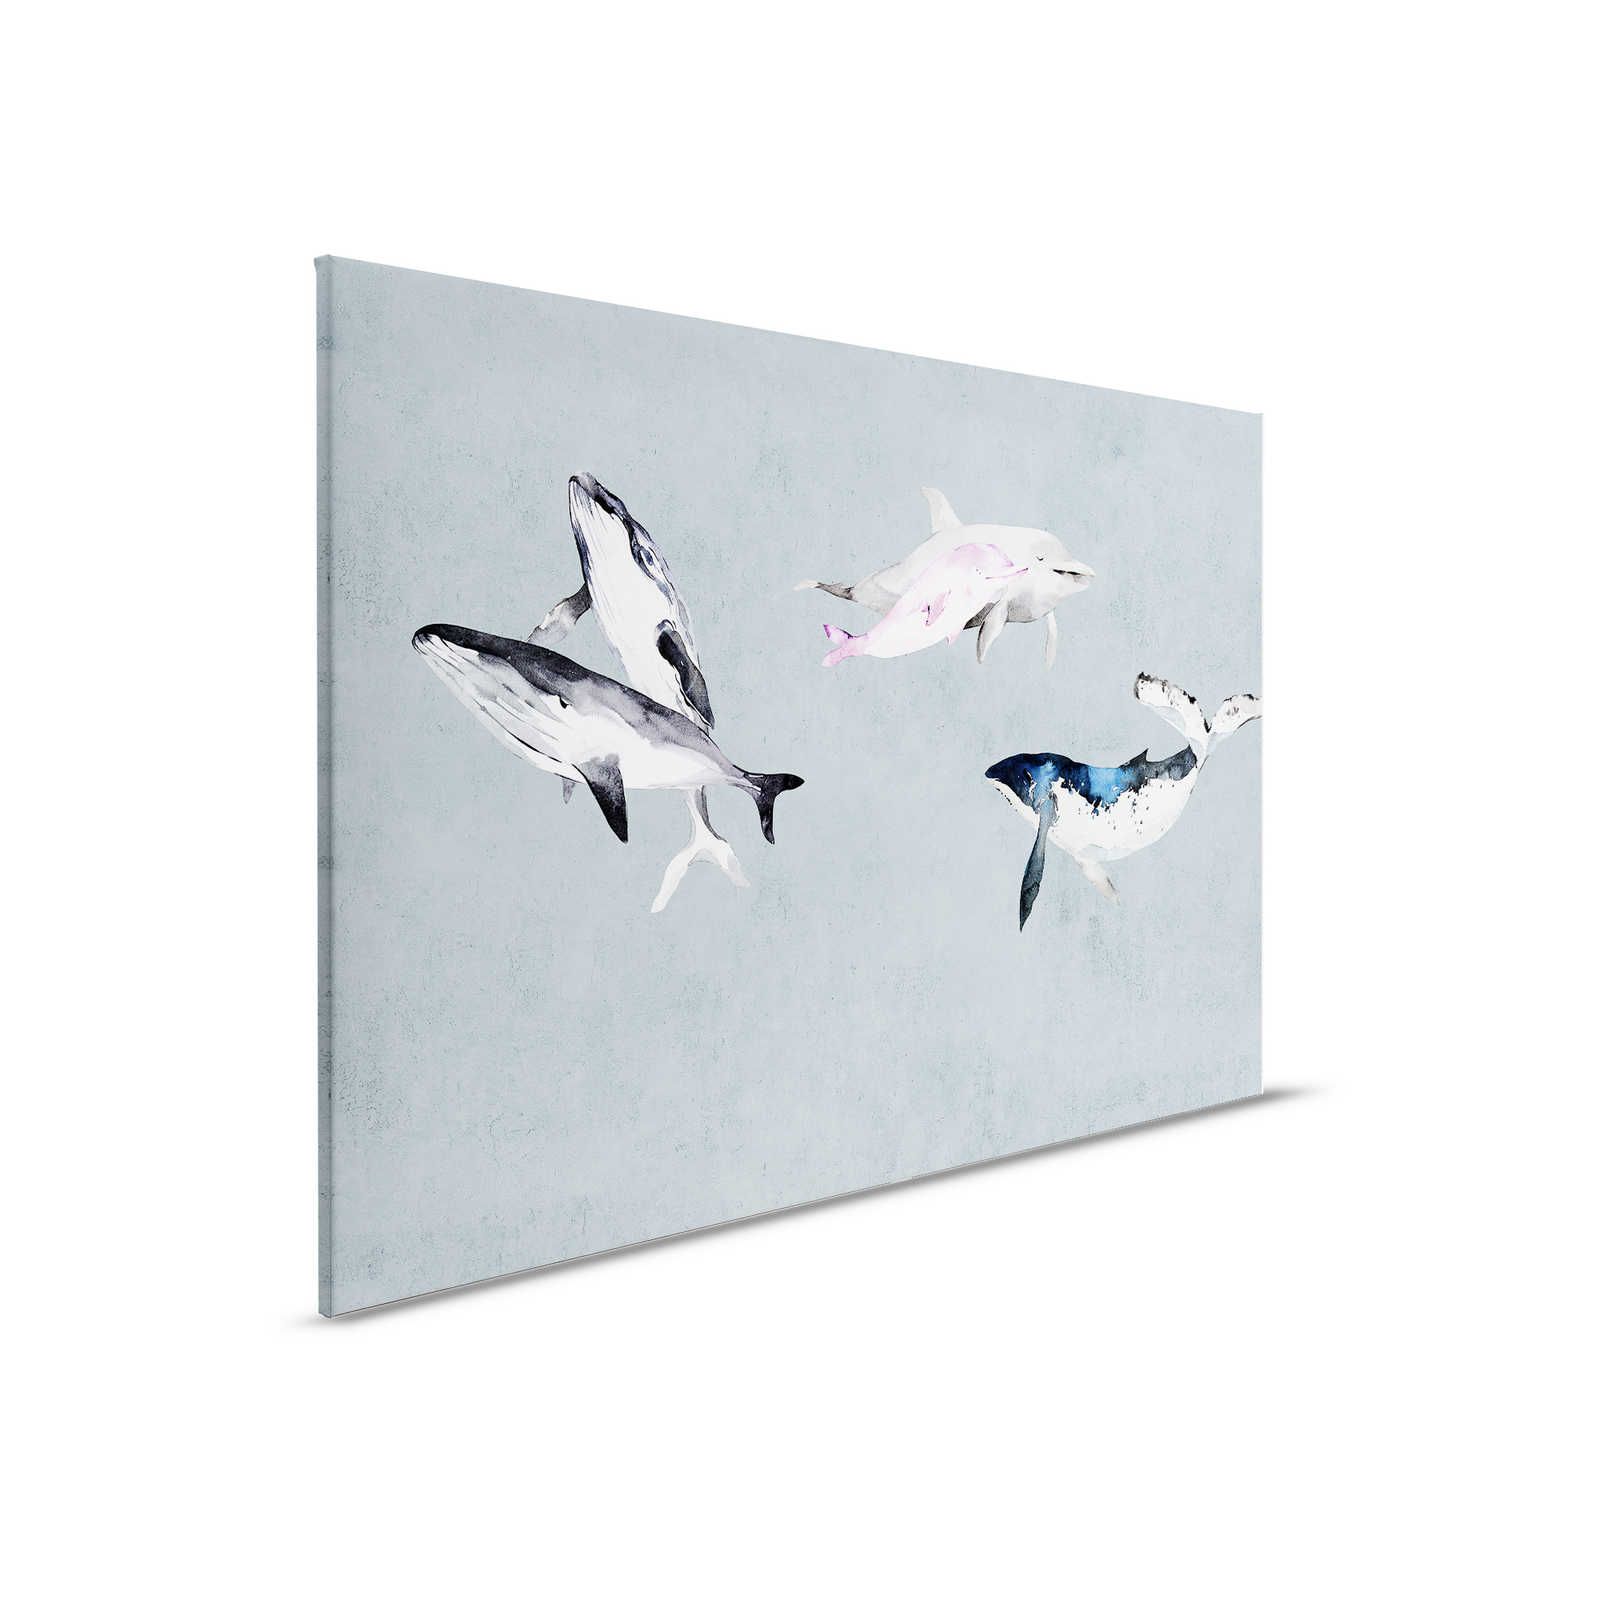 Oceans Five 1 - Leinwandbild Wale & Delfine im Aquarell Stil – 0,90 m x 0,60 m
